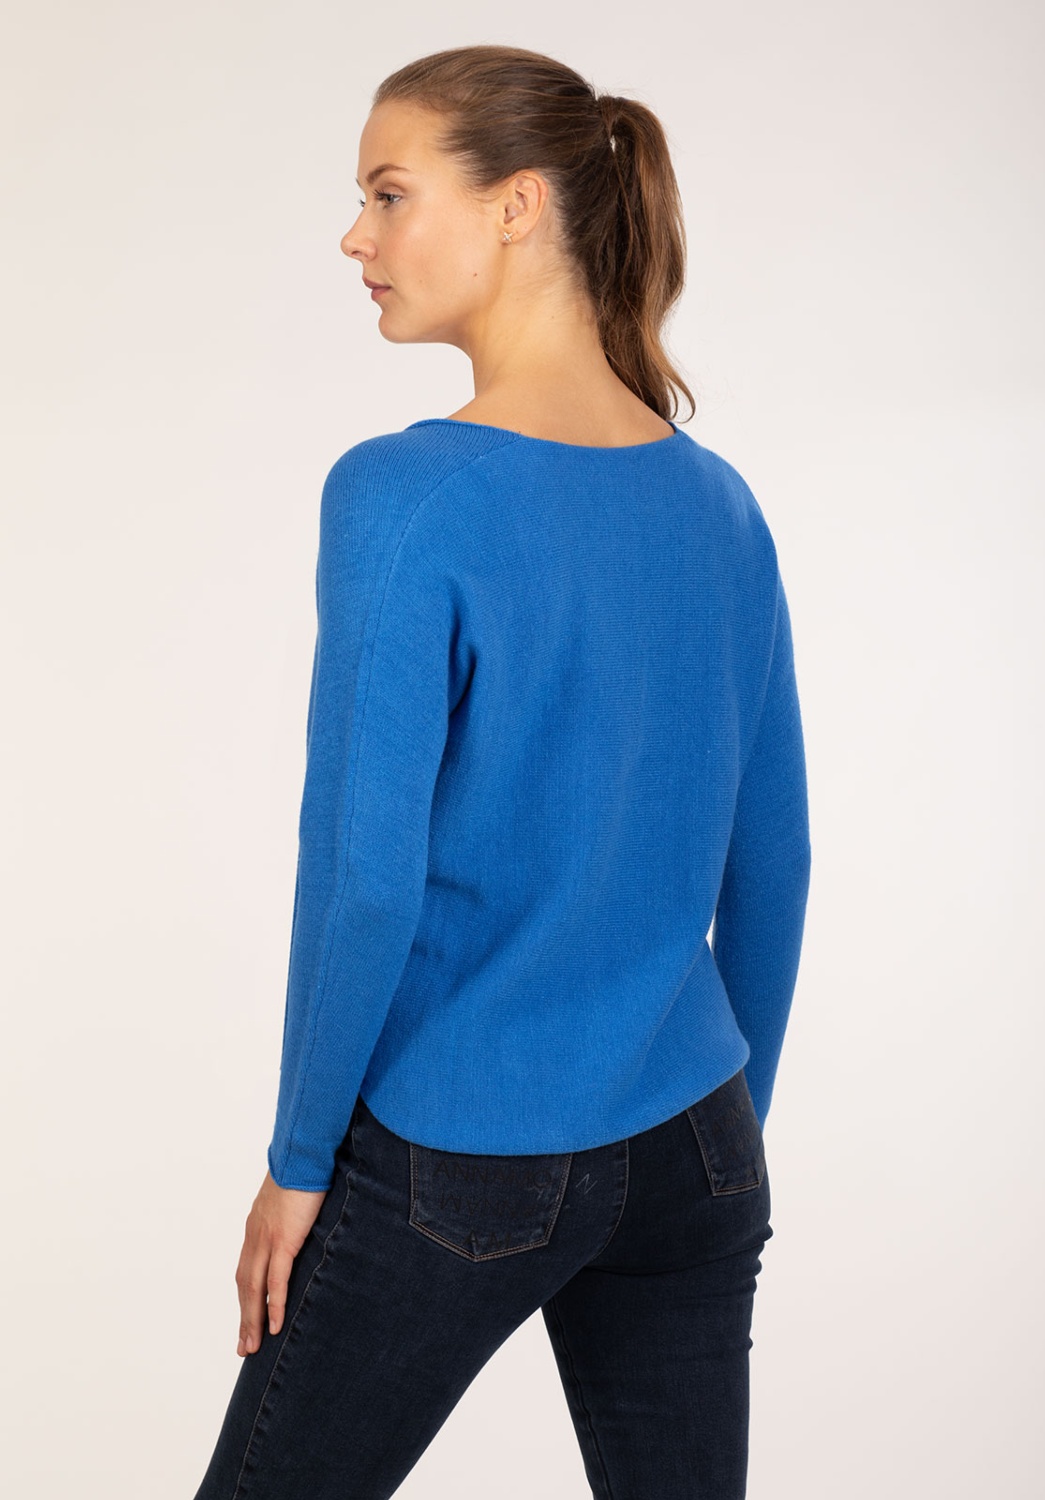 Soft Blue Sweater 2